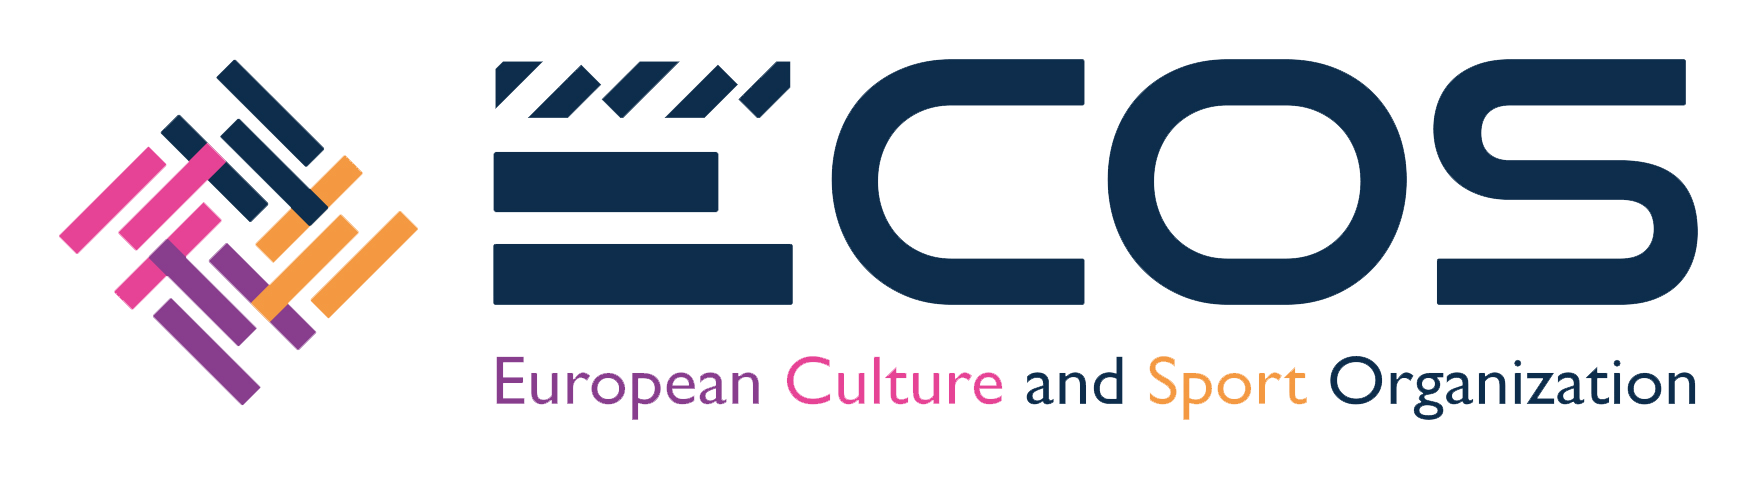 logo EUROPEAN CULTURE AND SPORT ORGANIZATION - ECOS